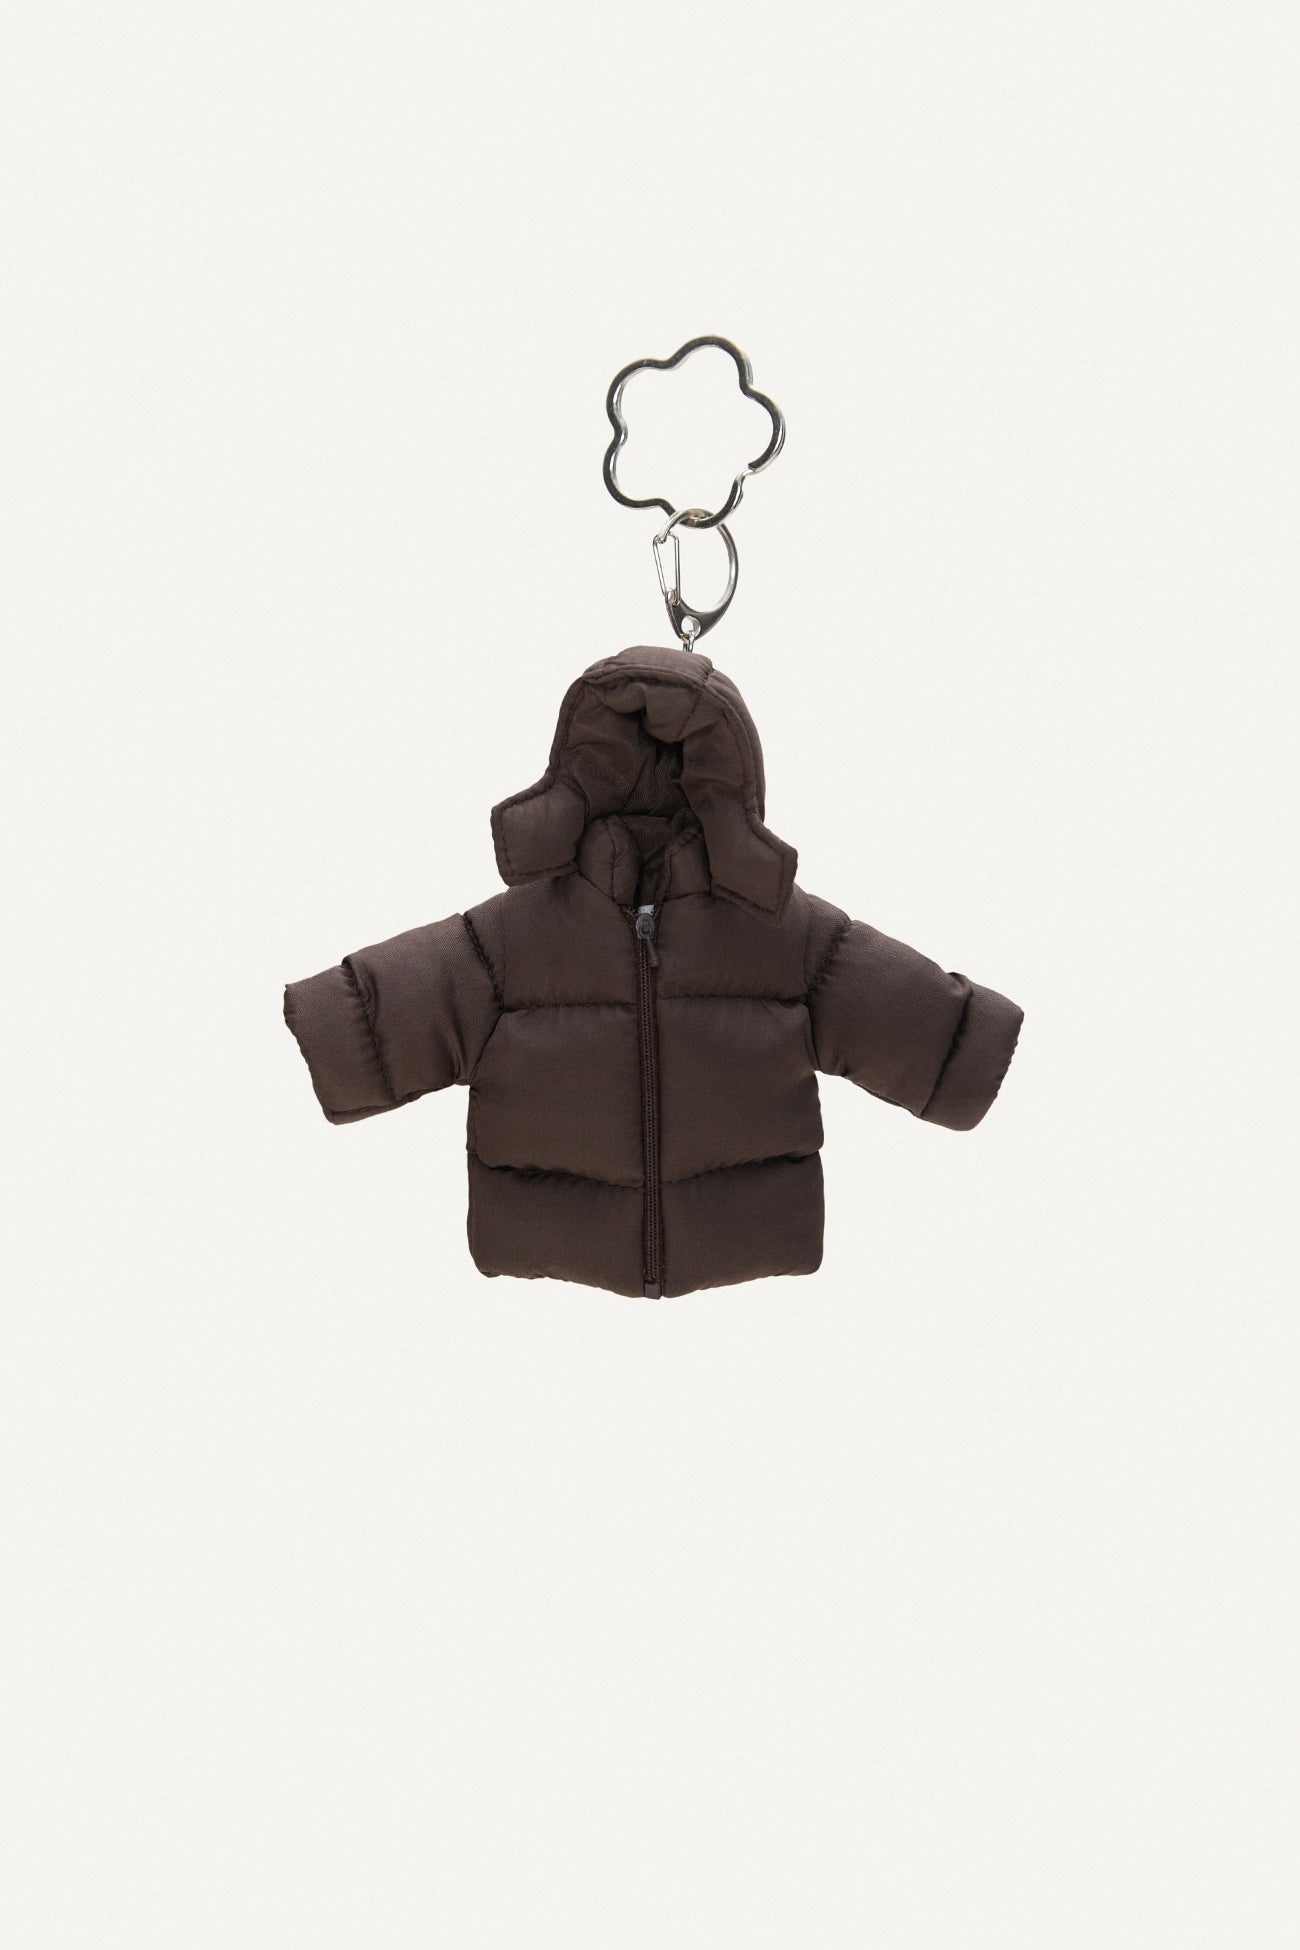 Key Chain “Down jacket” Gen.Ukrainian x Katsurina chocolate